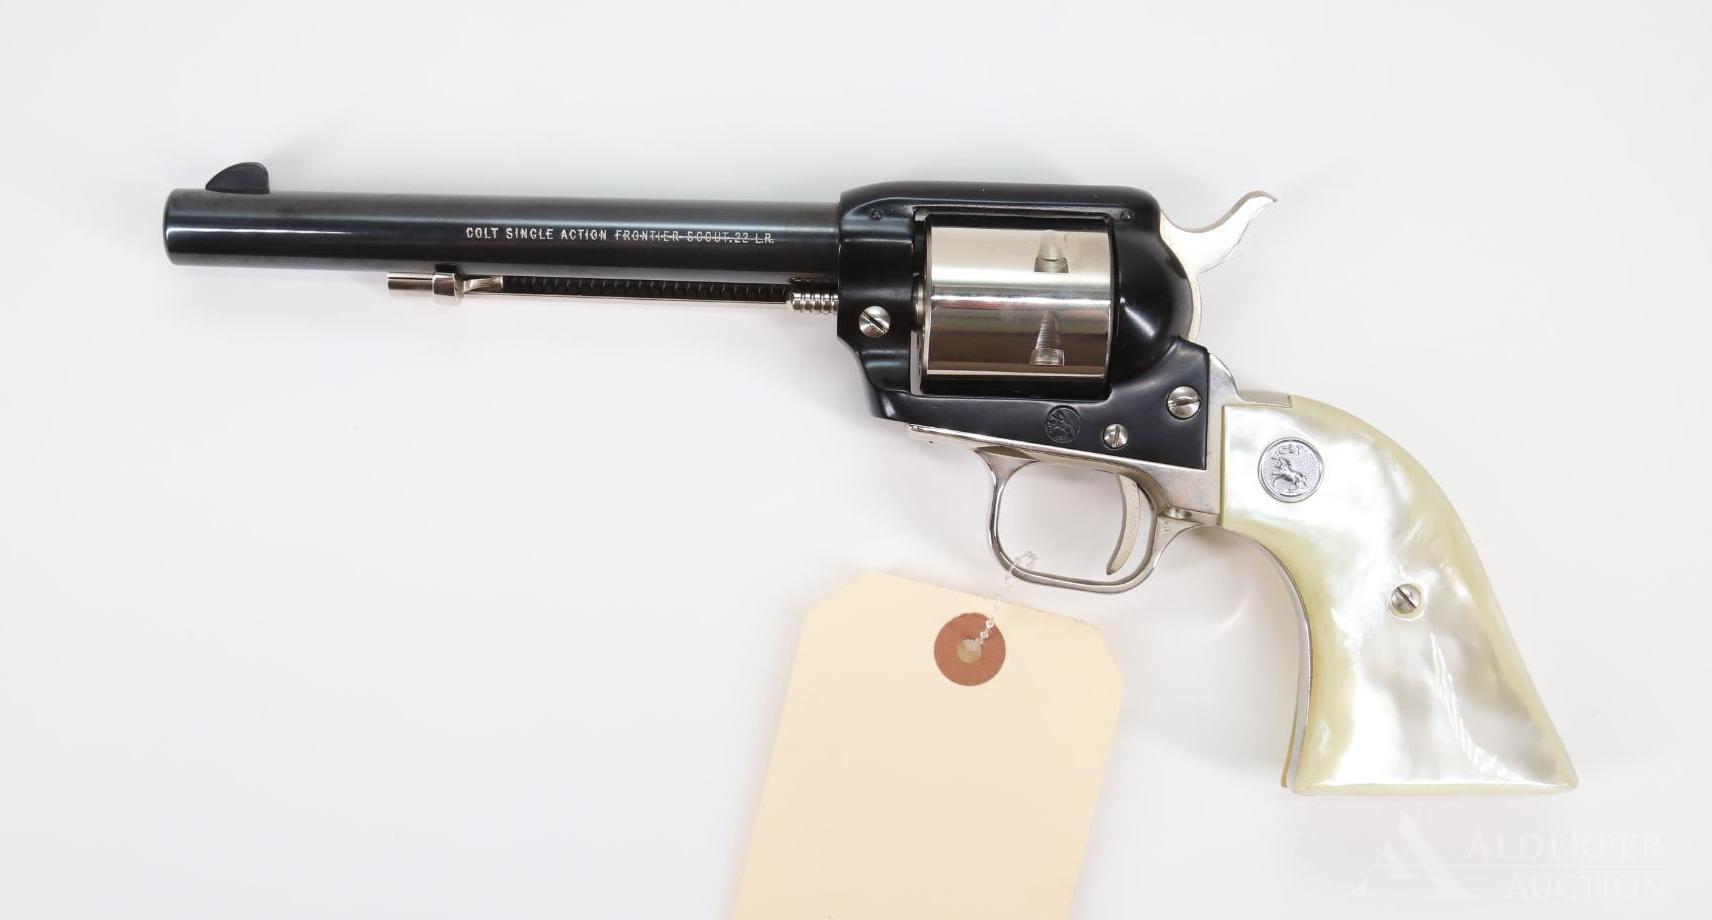 Colt Frontier Scout Lawman Series Wild Bill Hickok Commemorative Single Action Revolver Cased Set